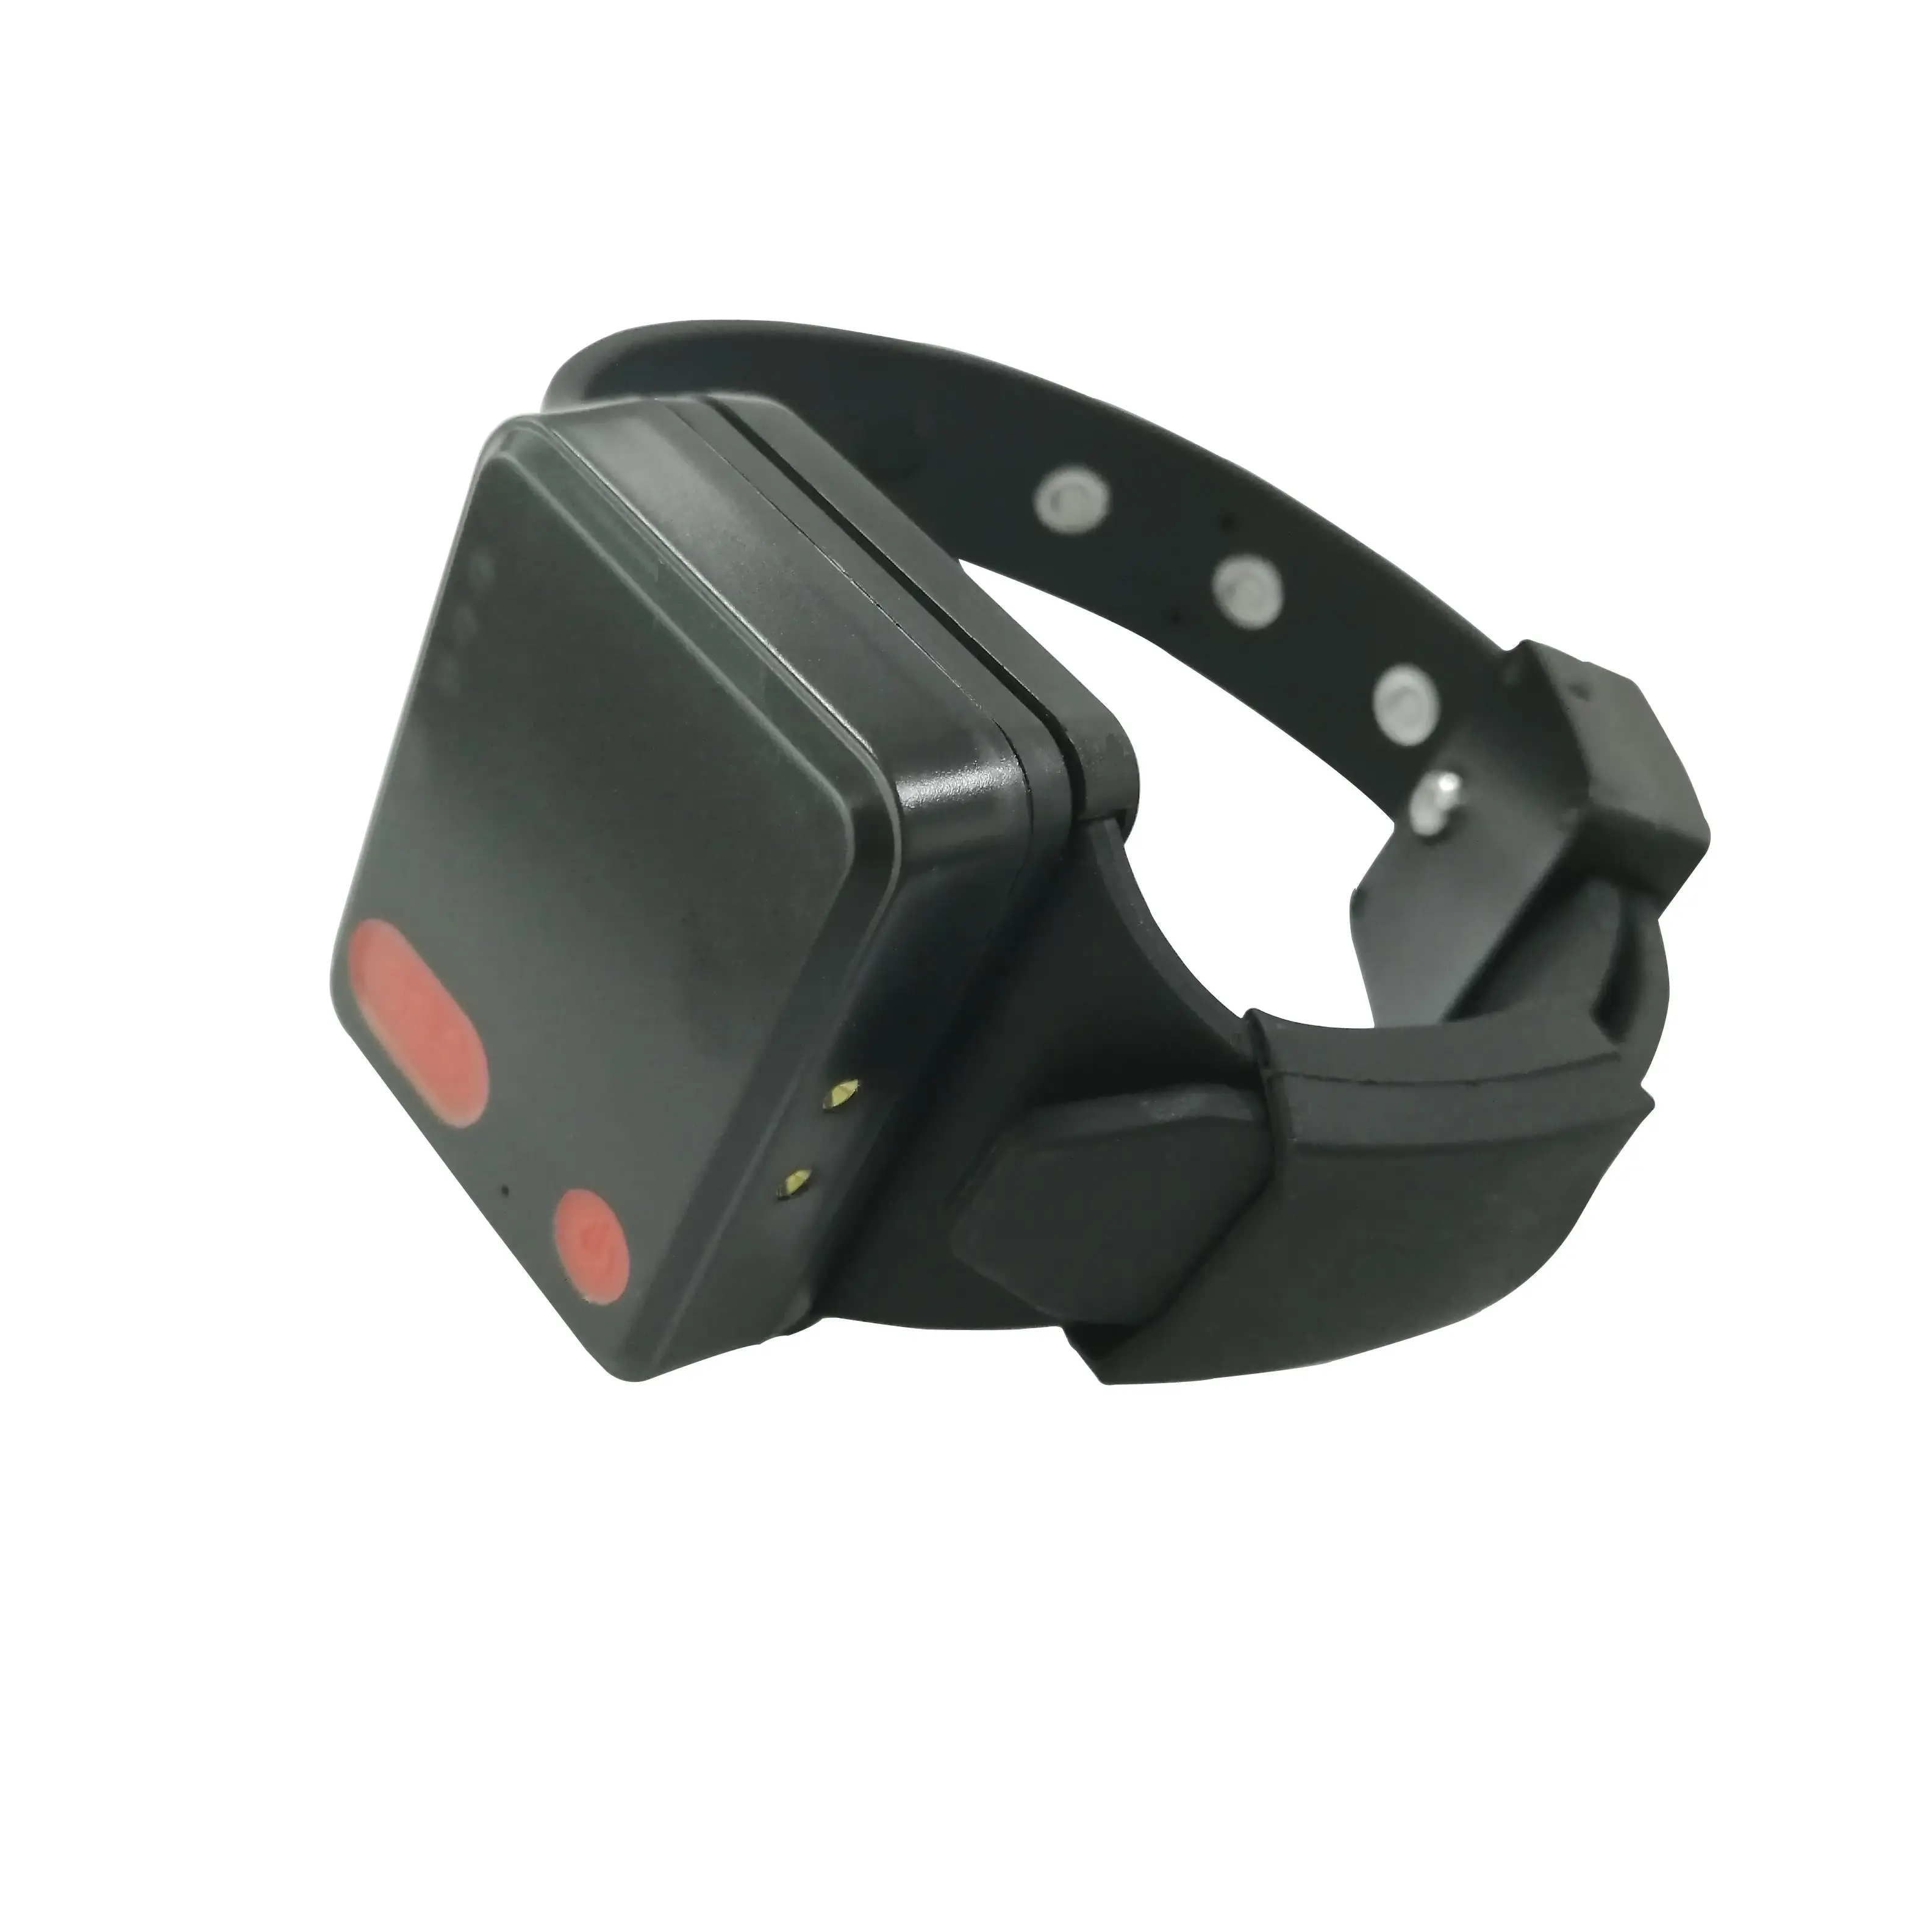 3g Gps Ankle Bracelet Tracker For Prisoner With Key Lock - Buy Ankle